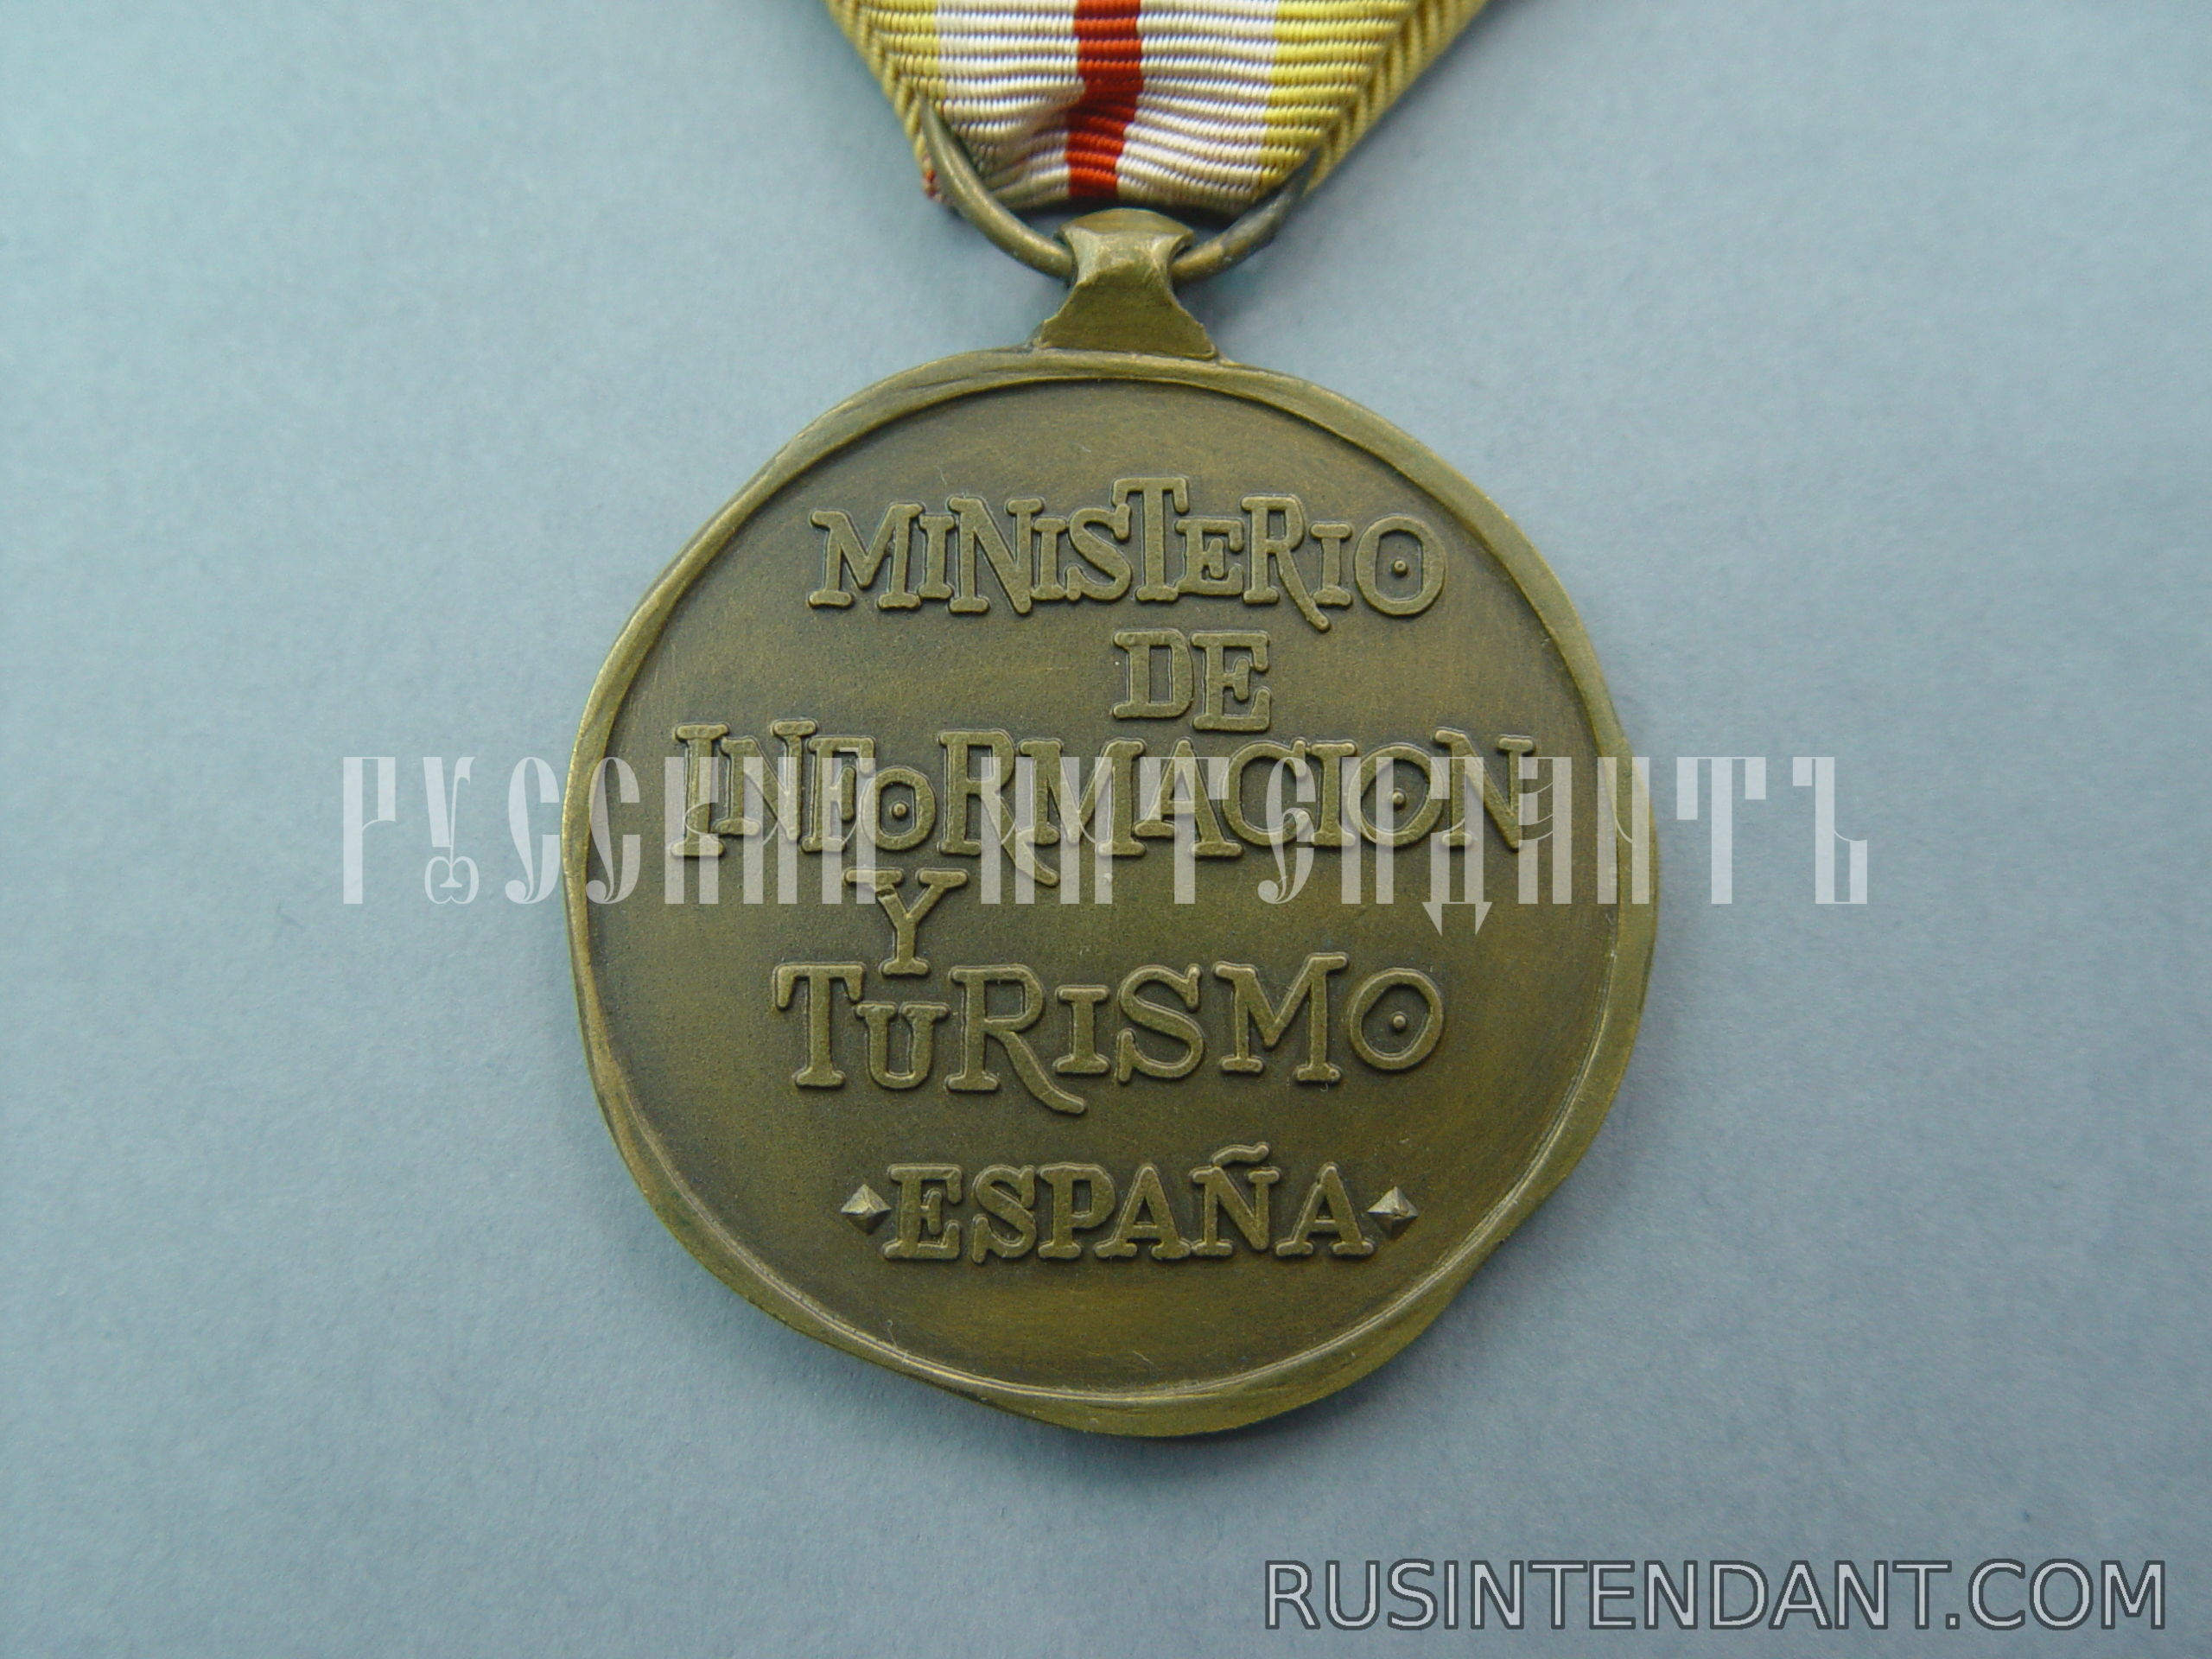 Фото 4: Медаль Министерства информации и туризма Испании 